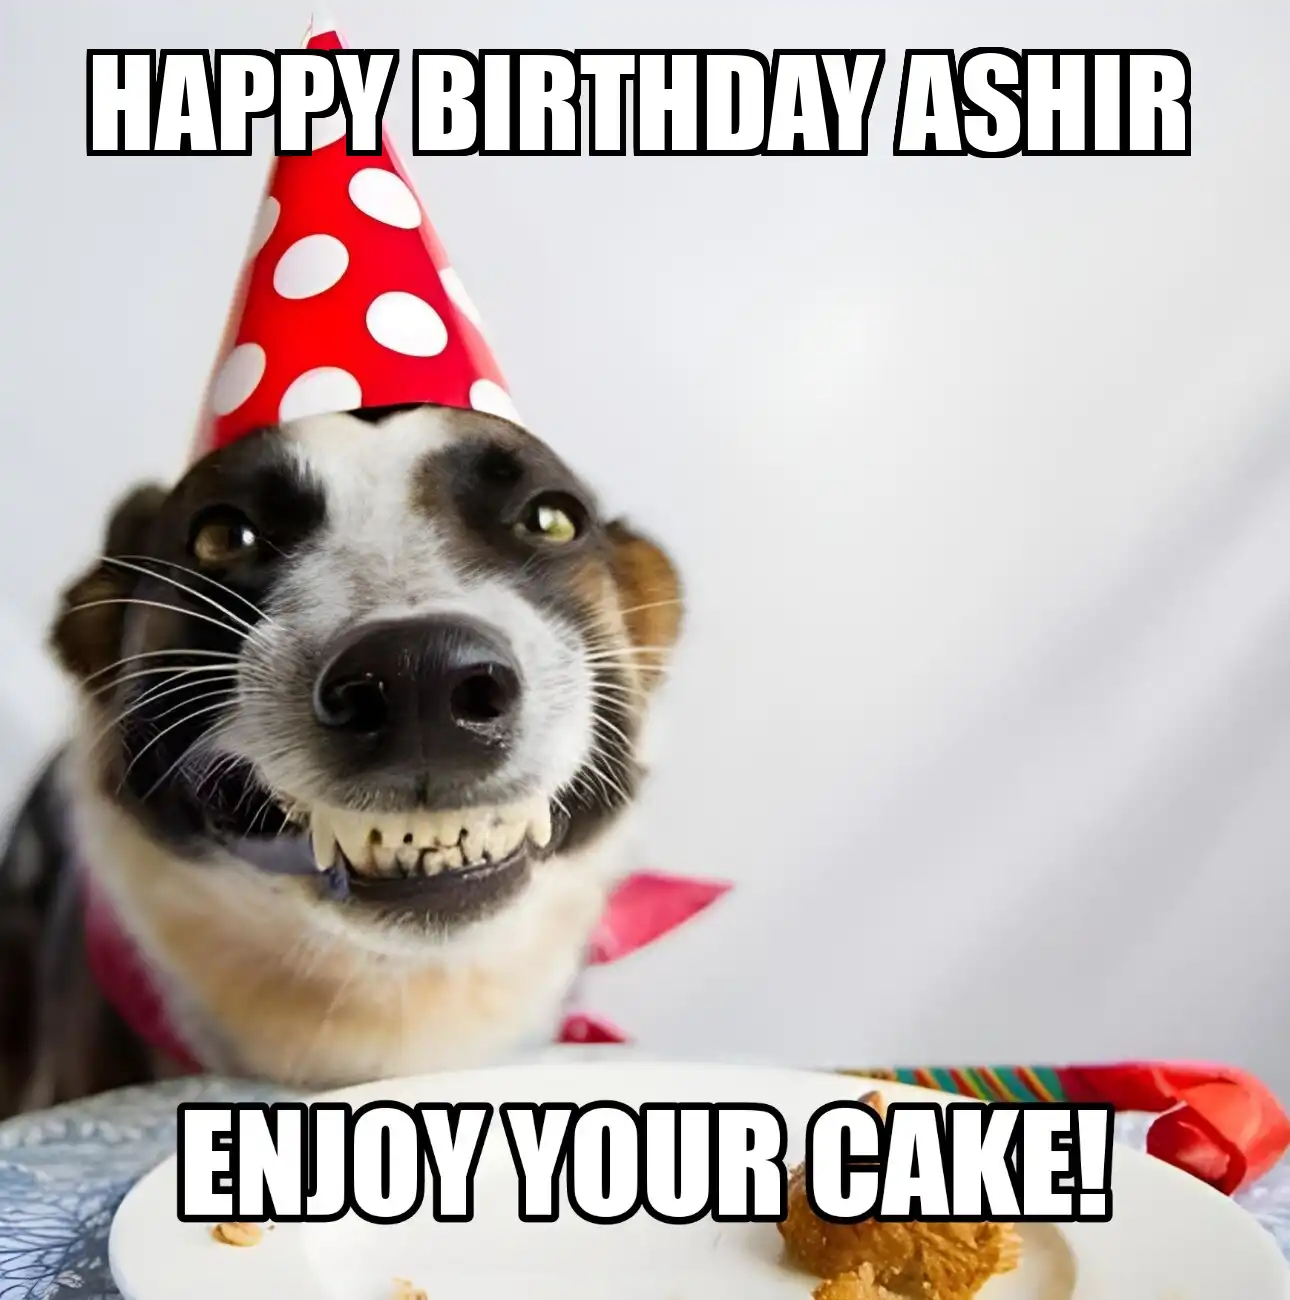 Happy Birthday Ashir Enjoy Your Cake Dog Meme